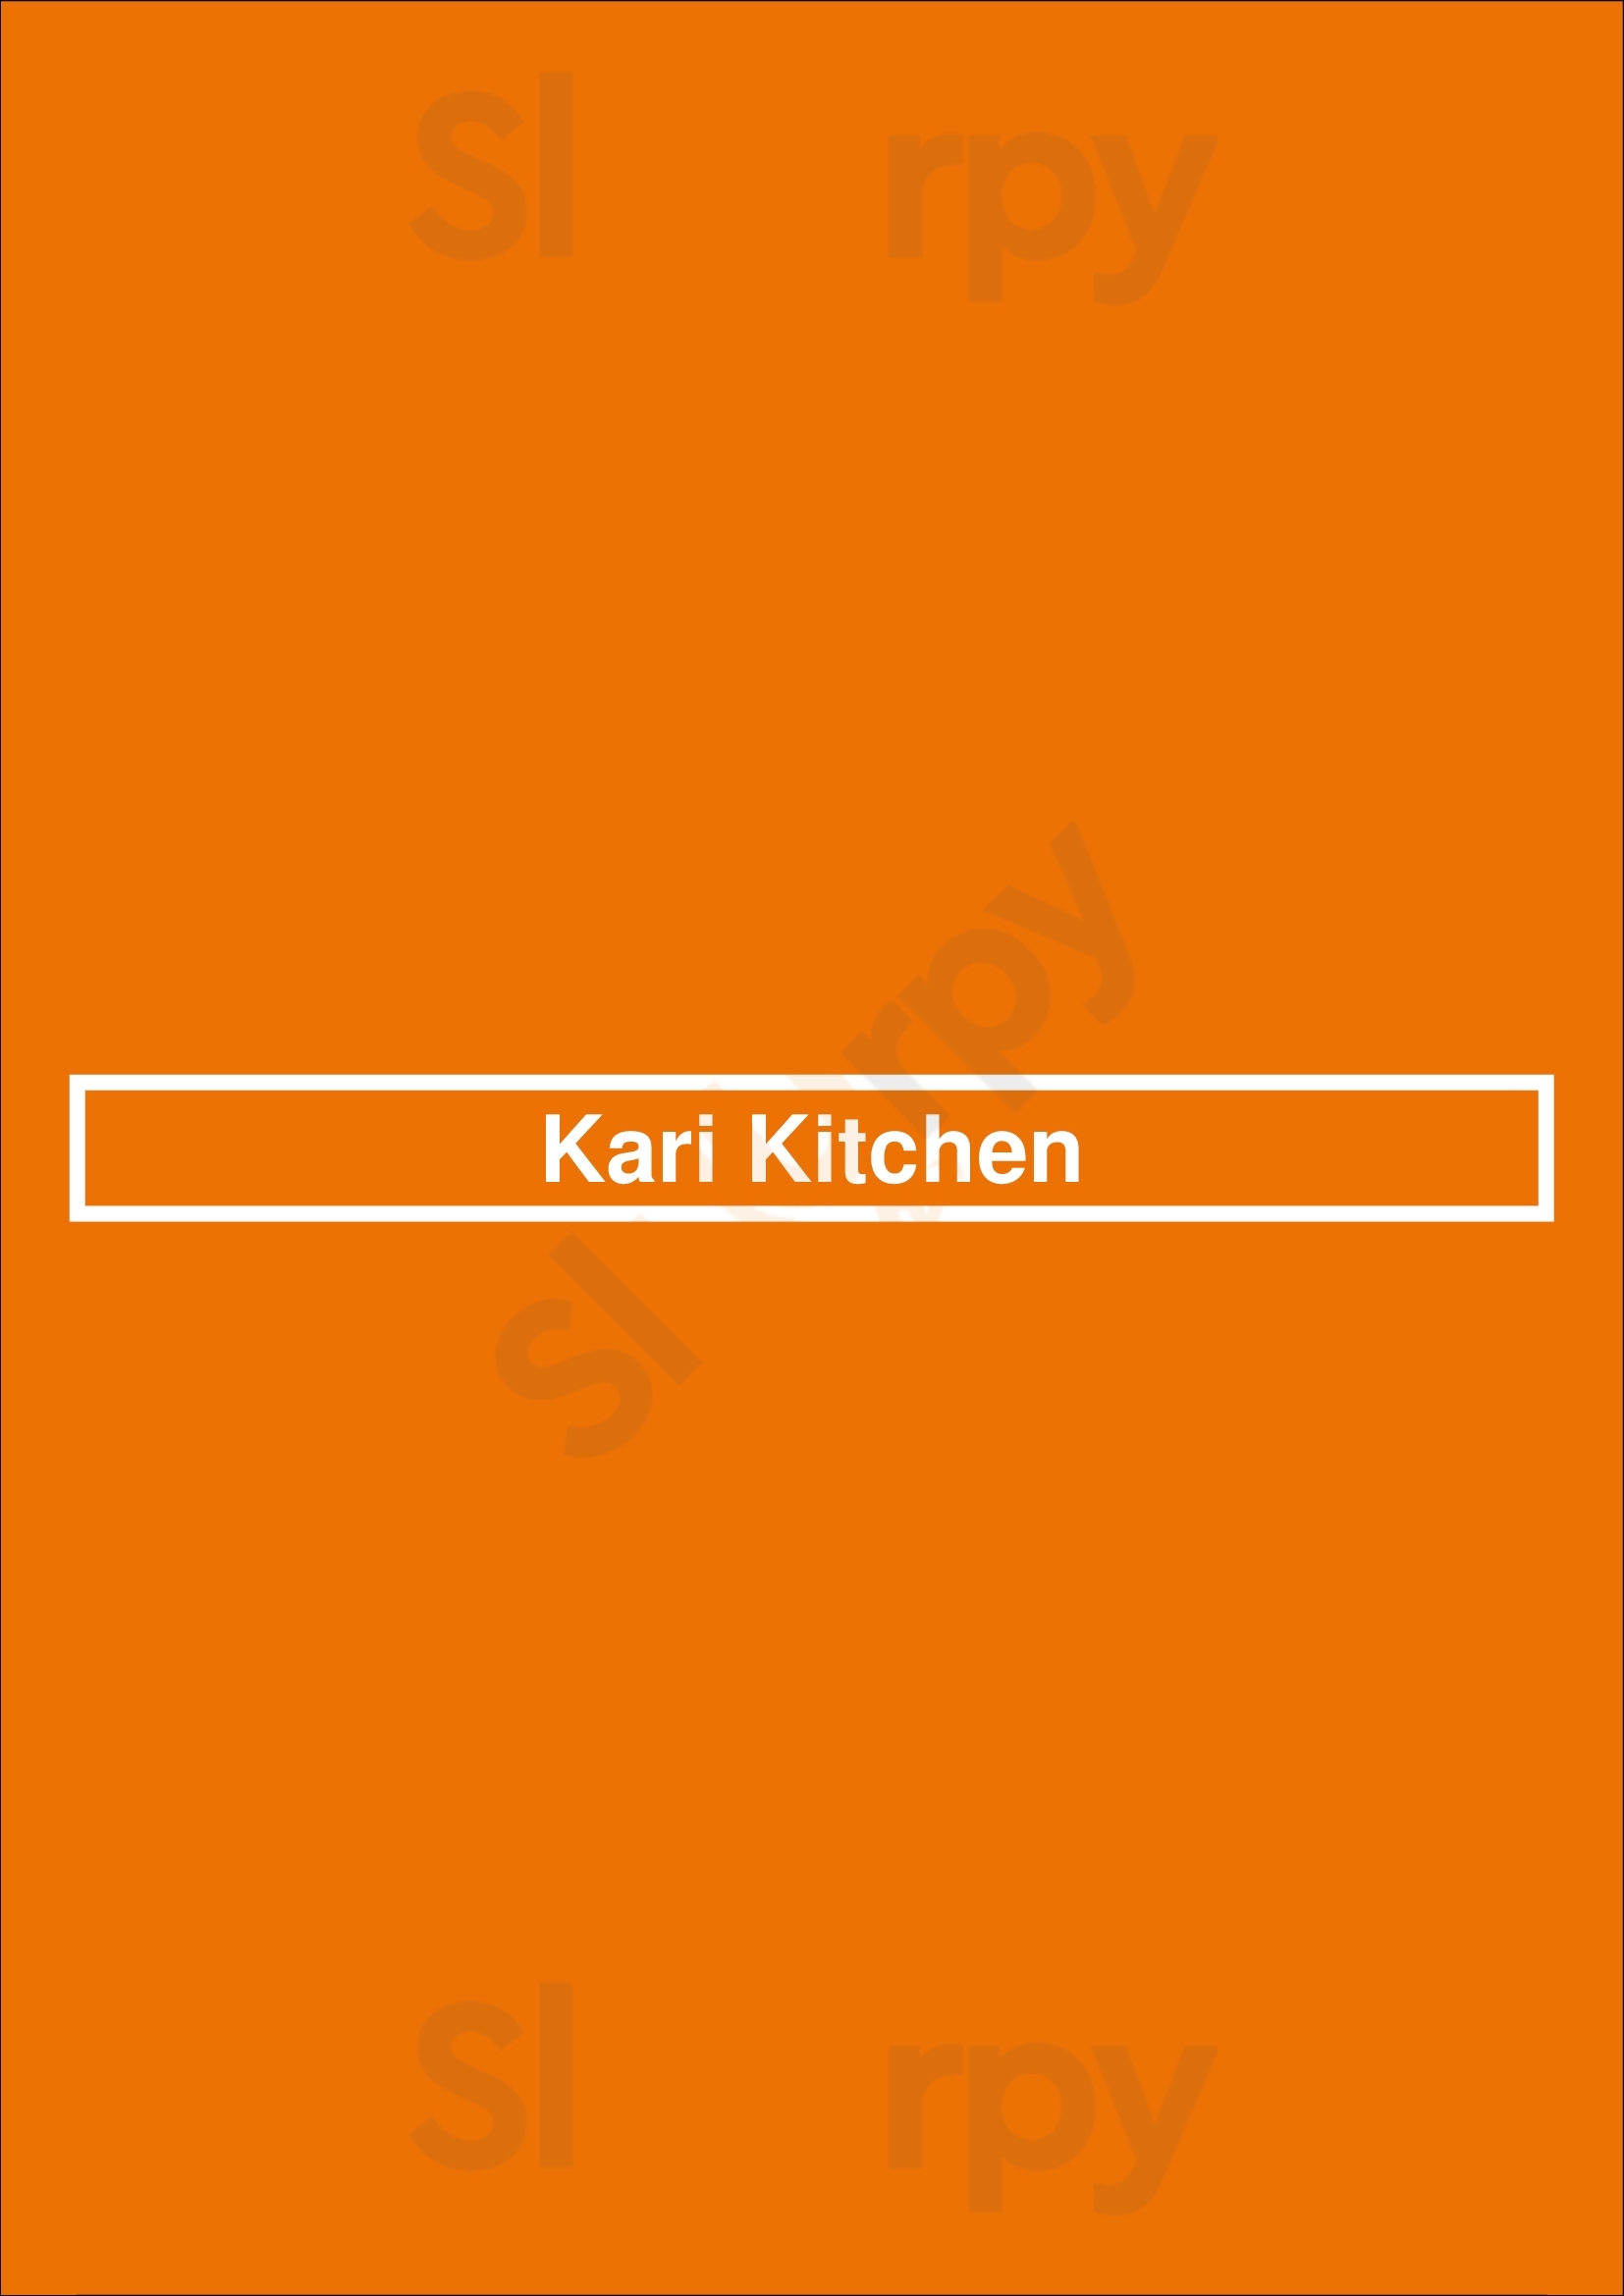 Kari Kitchen Vancouver Menu - 1